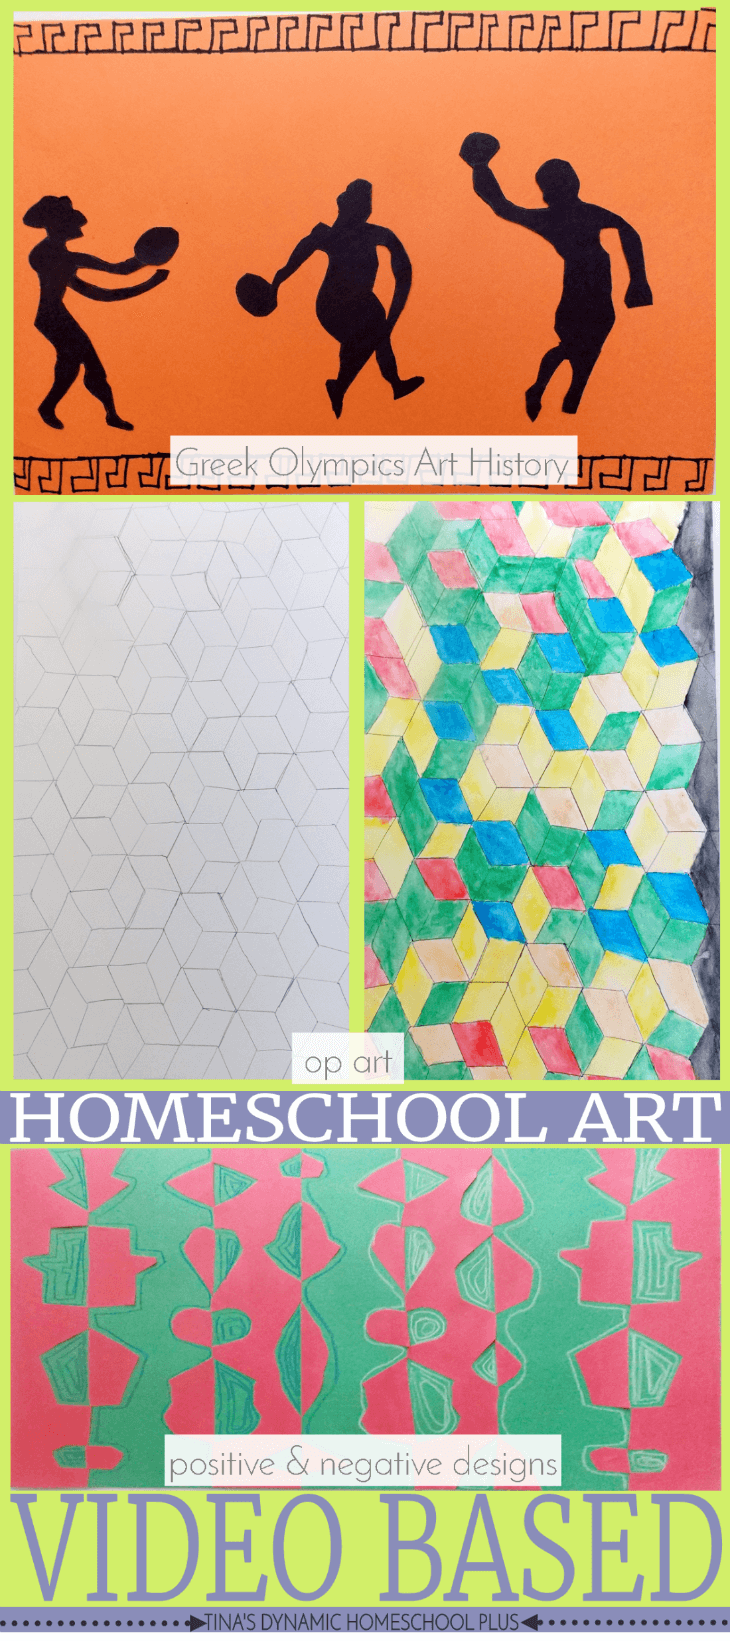 Homeschool Art @ Tina's Dynamic Homeschool Plus